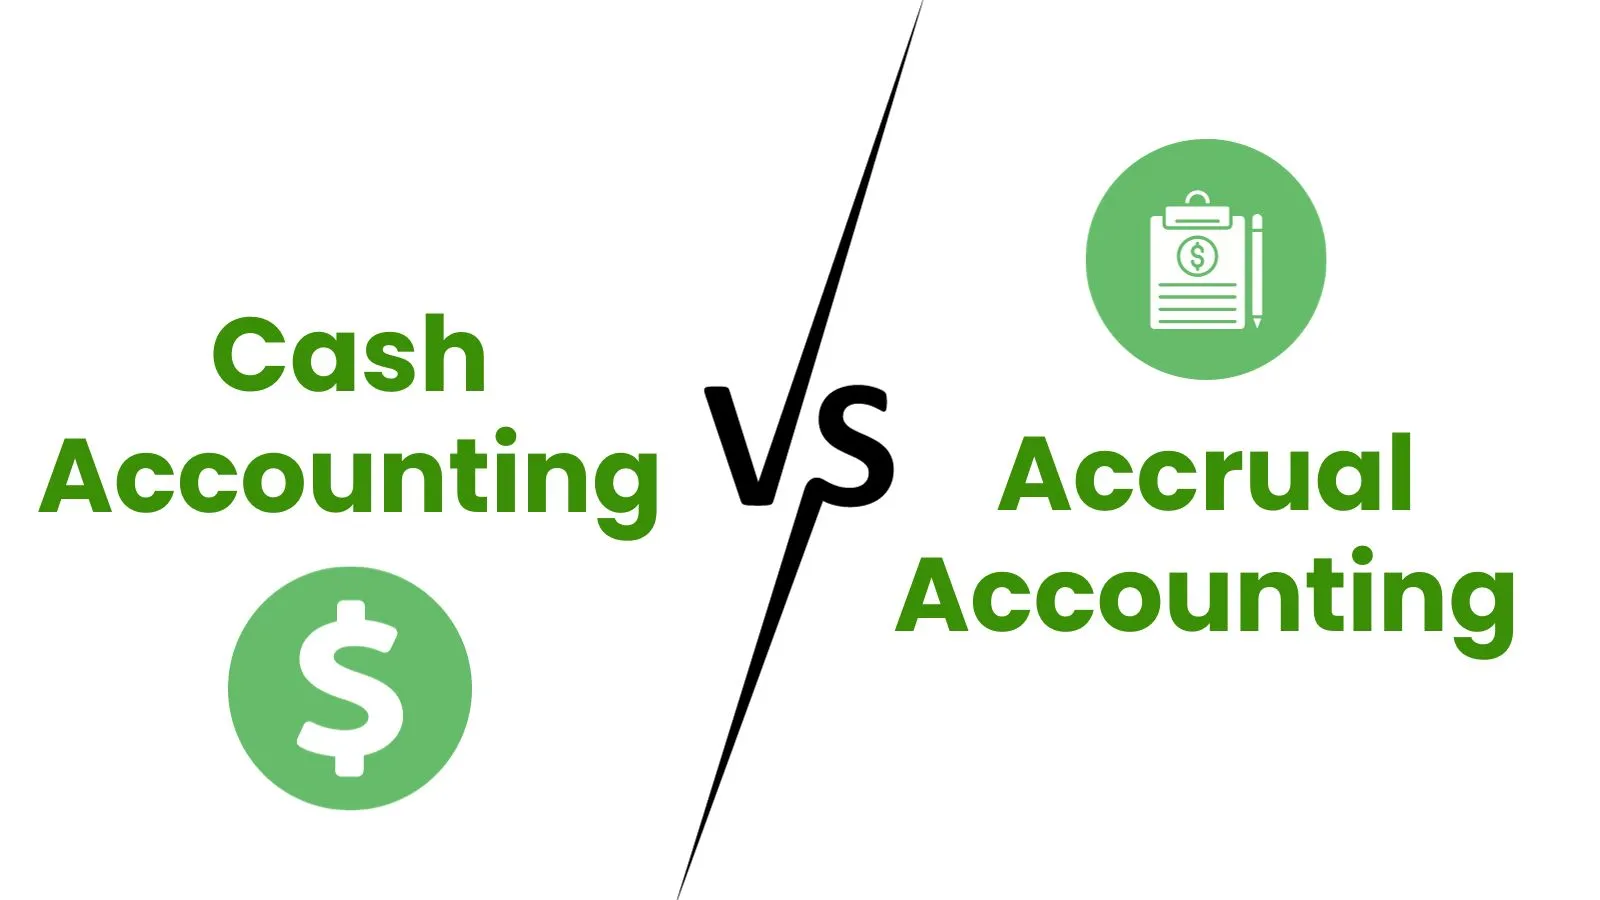 Cash vs Accrual Accounting